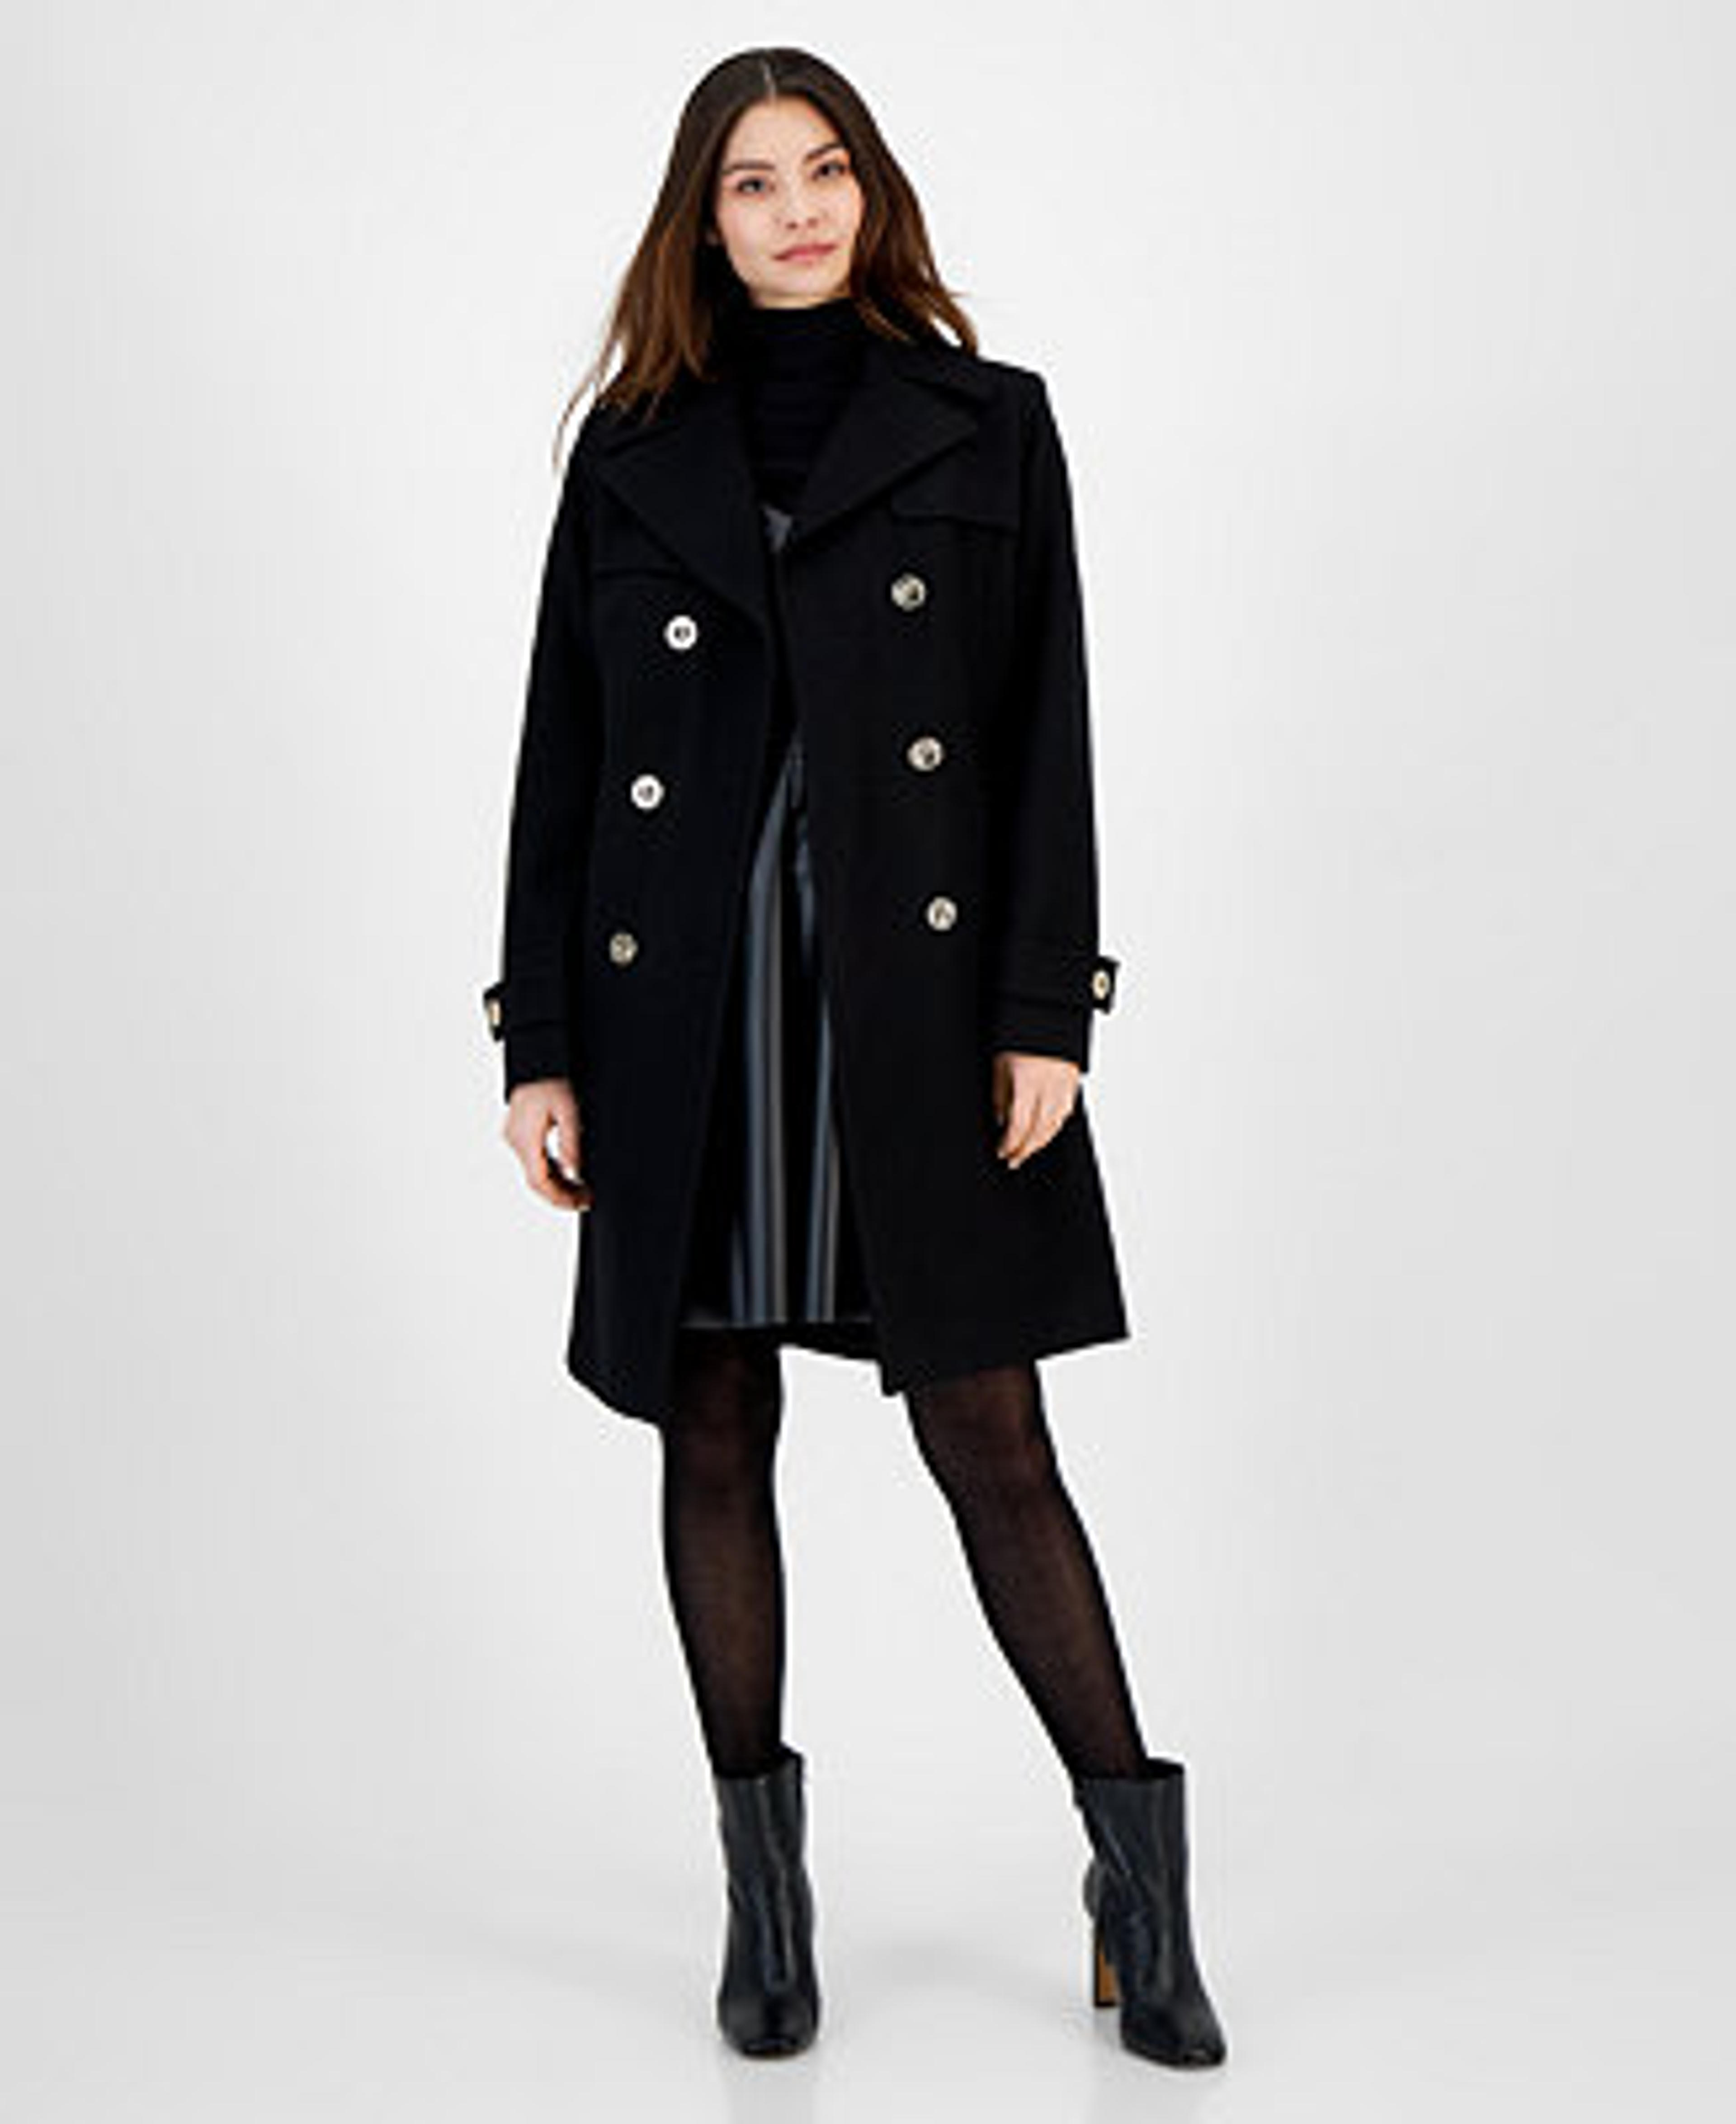 Michael Kors Women's Double-Breasted Peacoat Coat, Created for Macy's & Reviews - Coats & Jackets - Women - Macy's